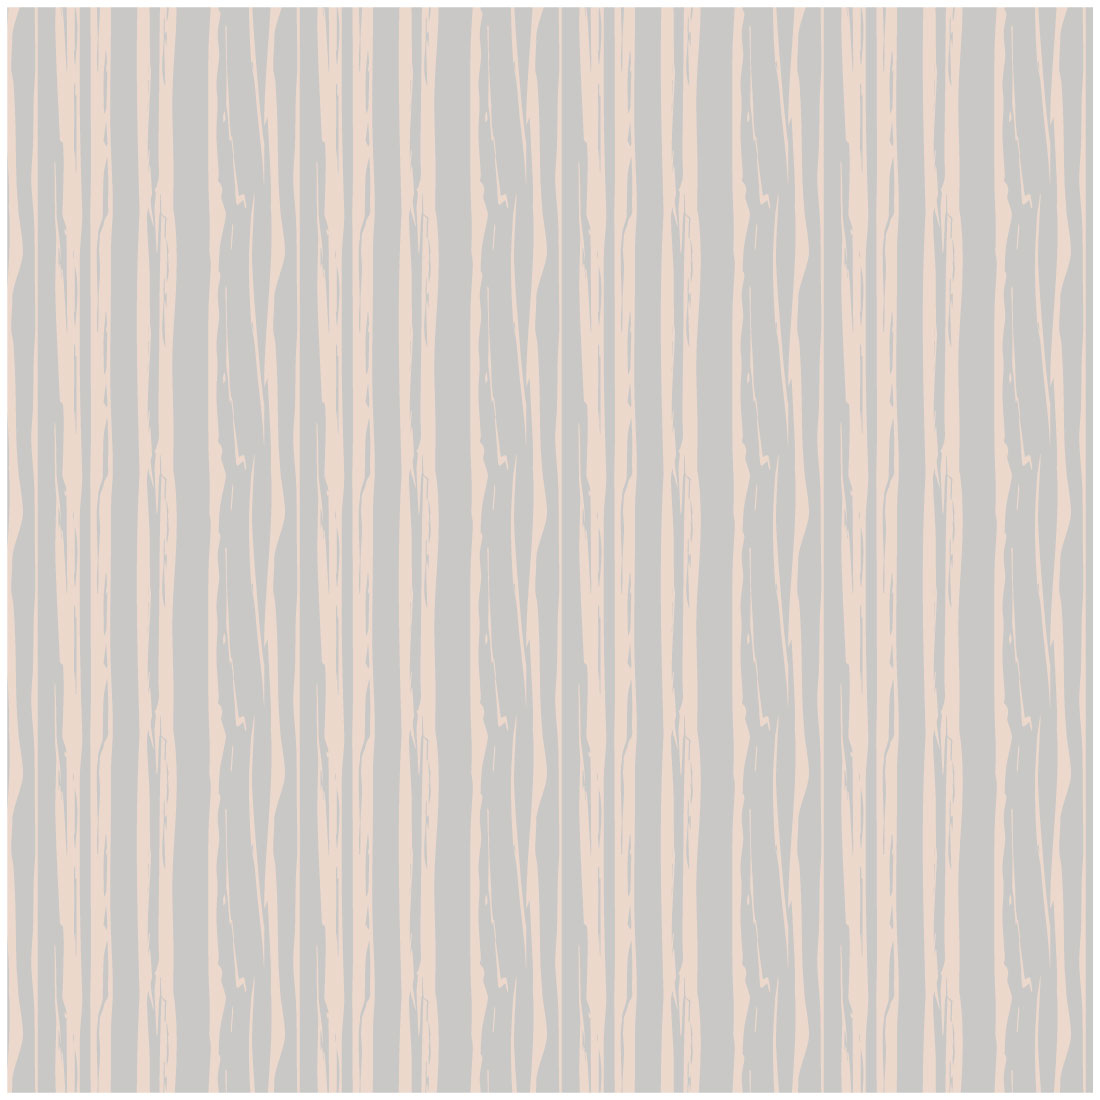 patterns woodgrain5 961